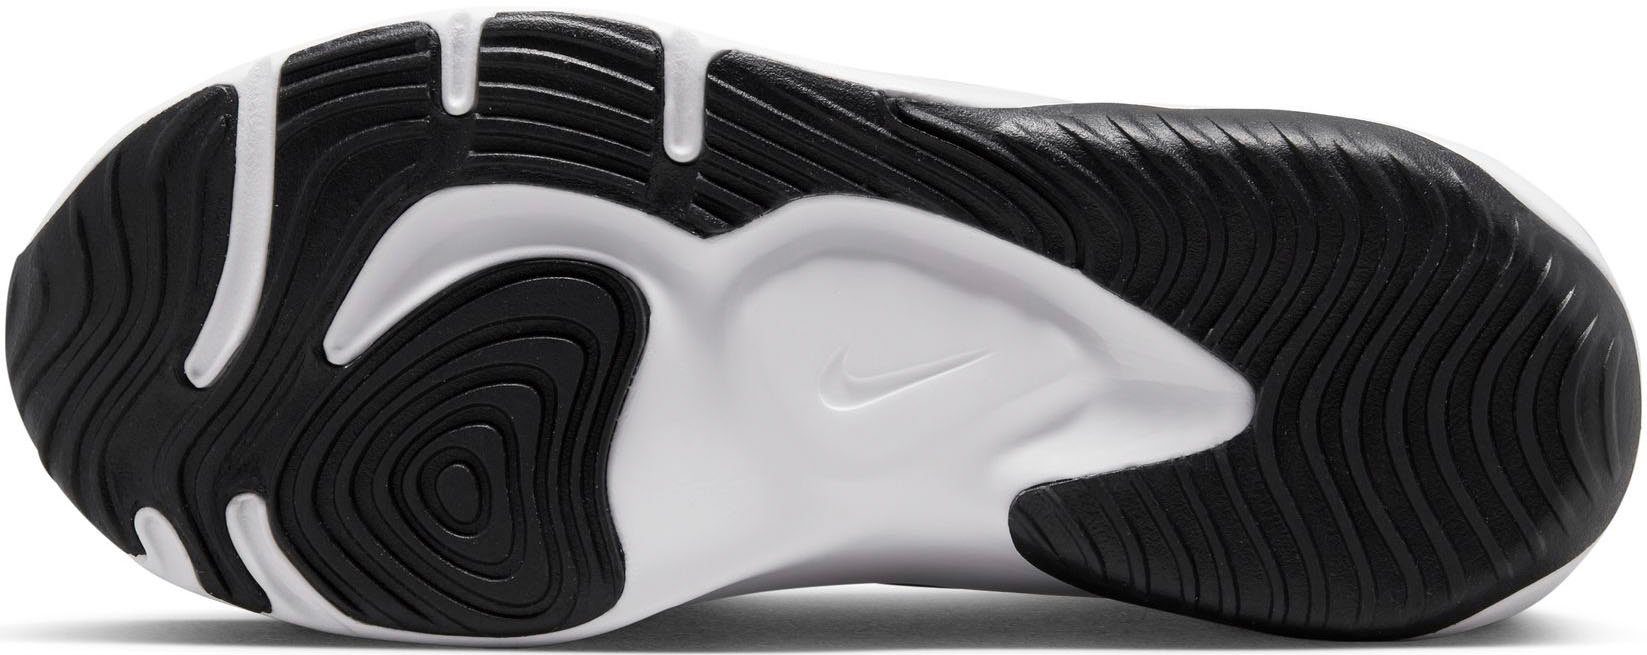 ESSENTIAL Nike 3 BLACK-WHITE-IRON-GREY LEGEND Fitnessschuh